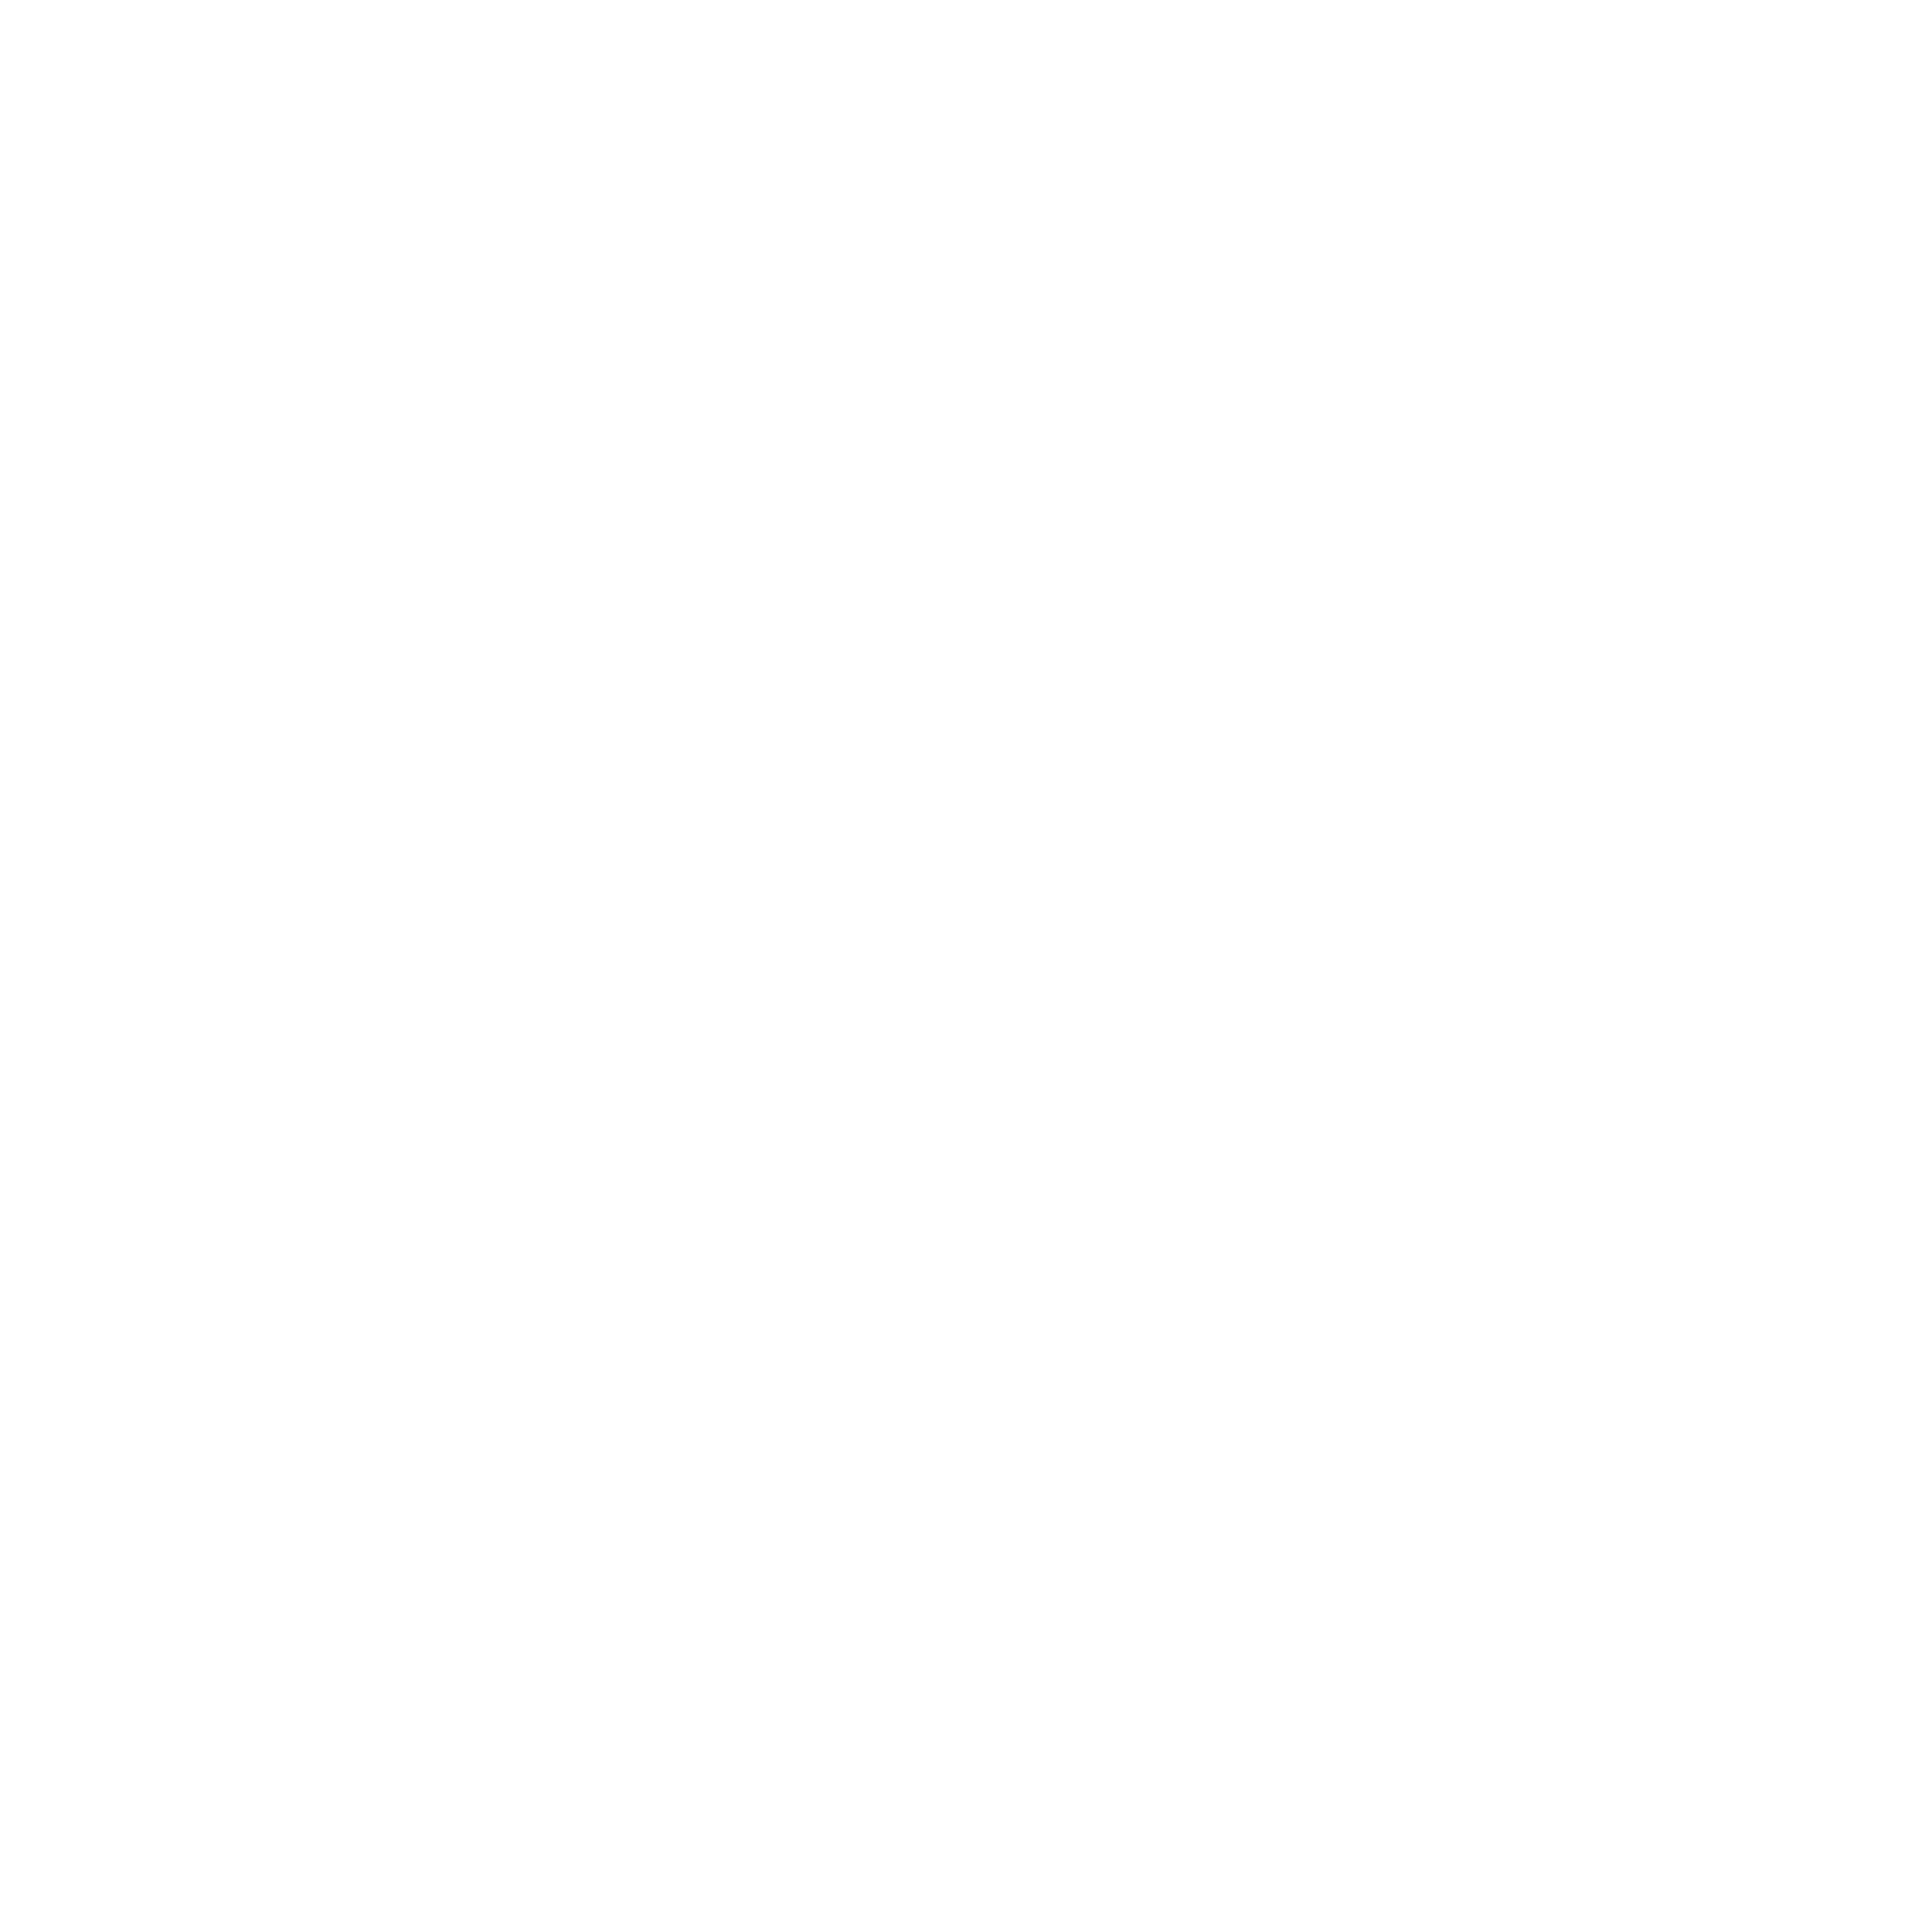 Atlanta Accelerate Mobile IV Therapy White Square Logo